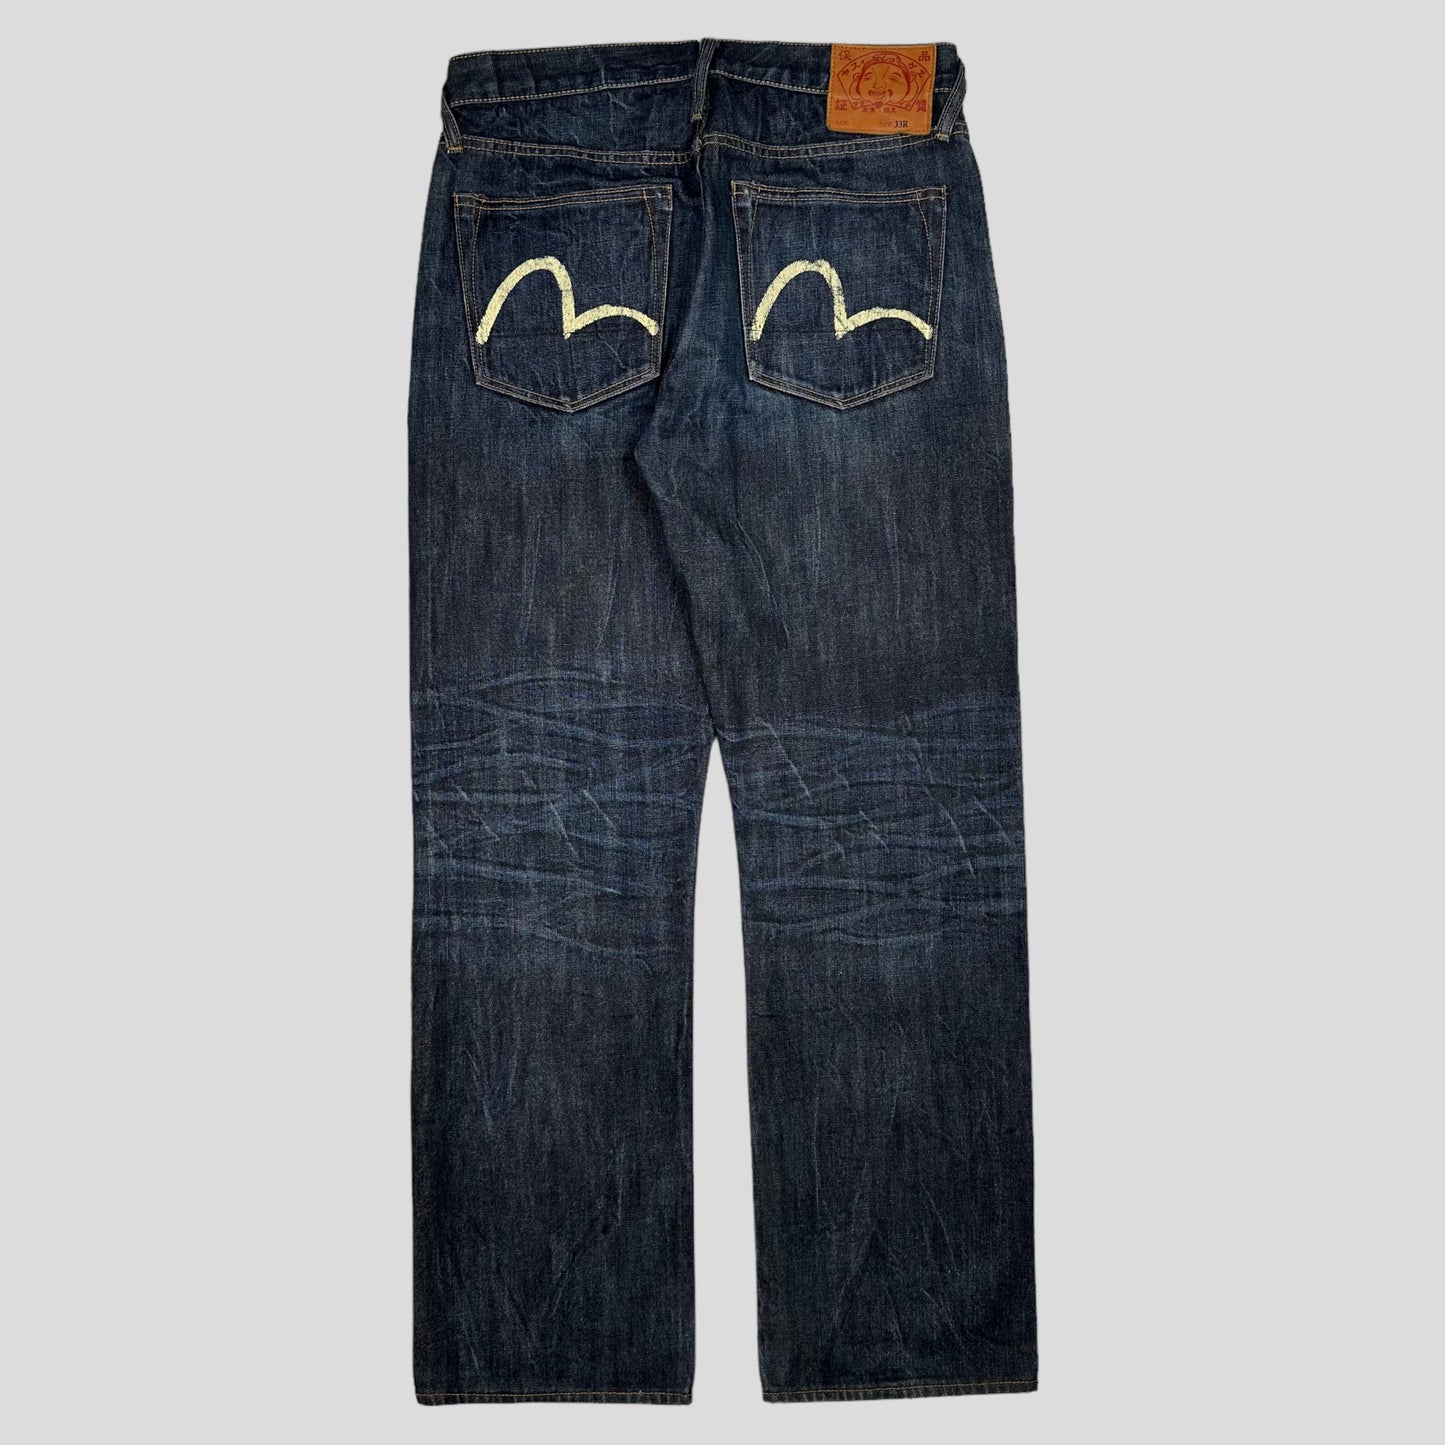 Evisu 00’s Gull Selvedge Denim Jeans - 33